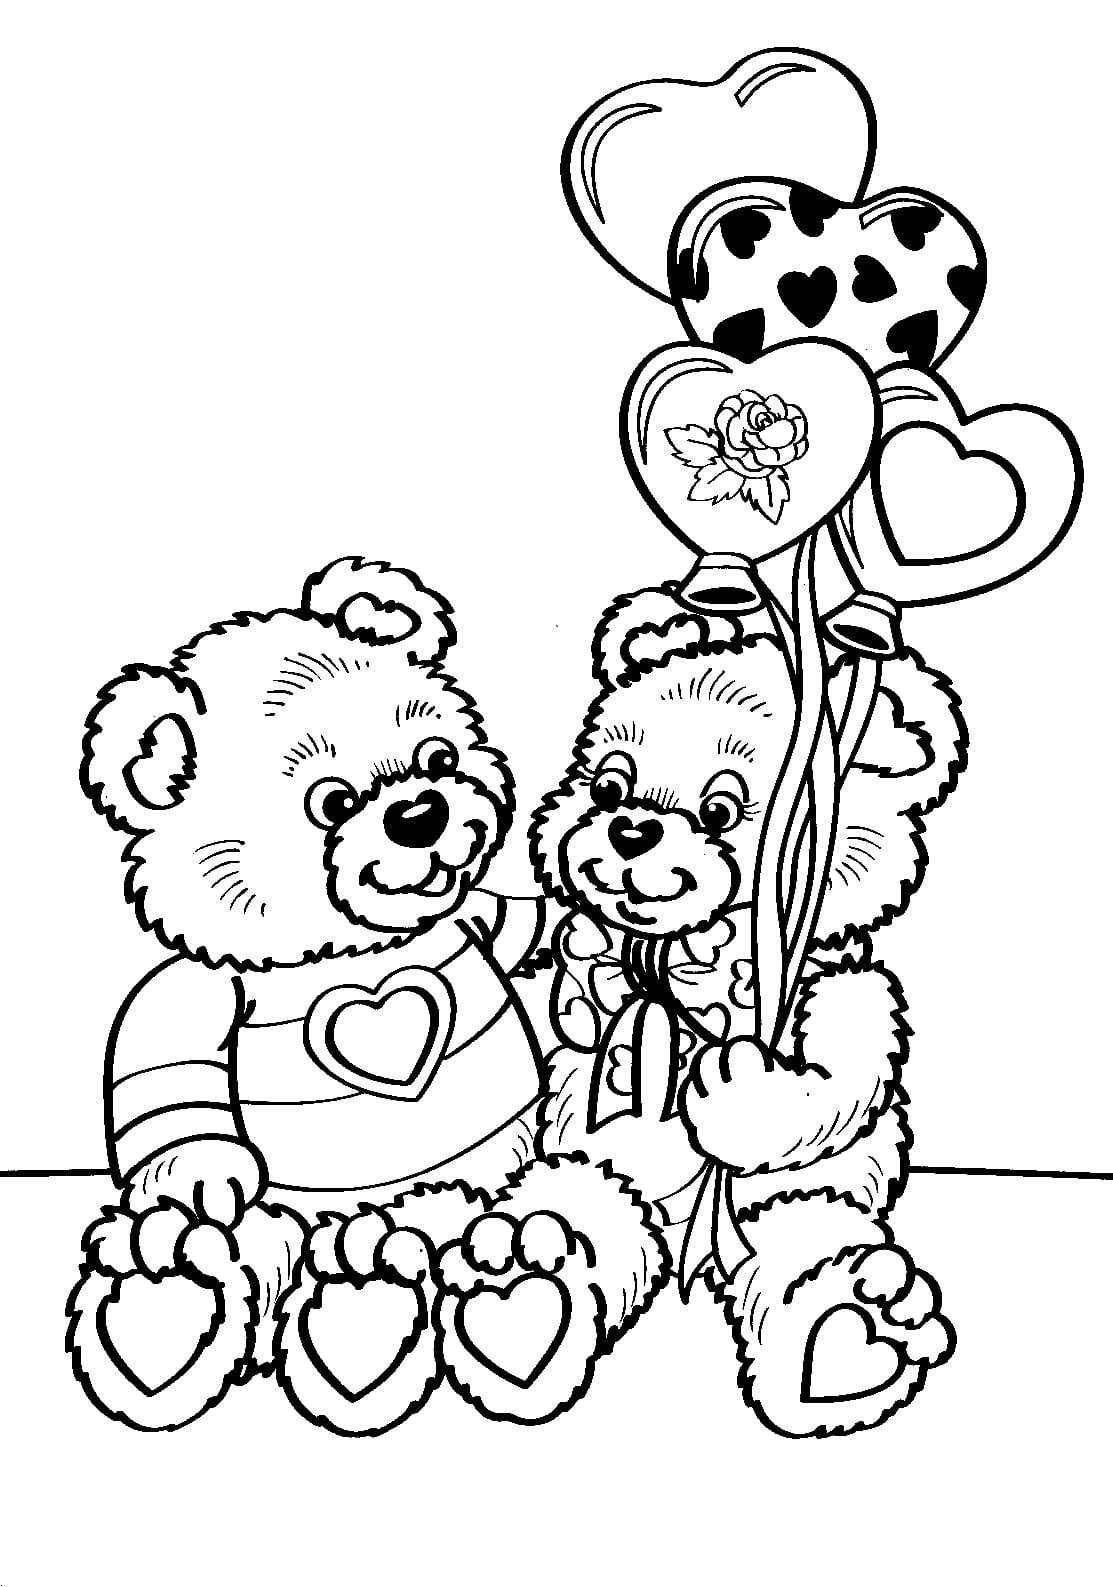 Coloring page Teddy Bears Teddy bears celebrate their birthday